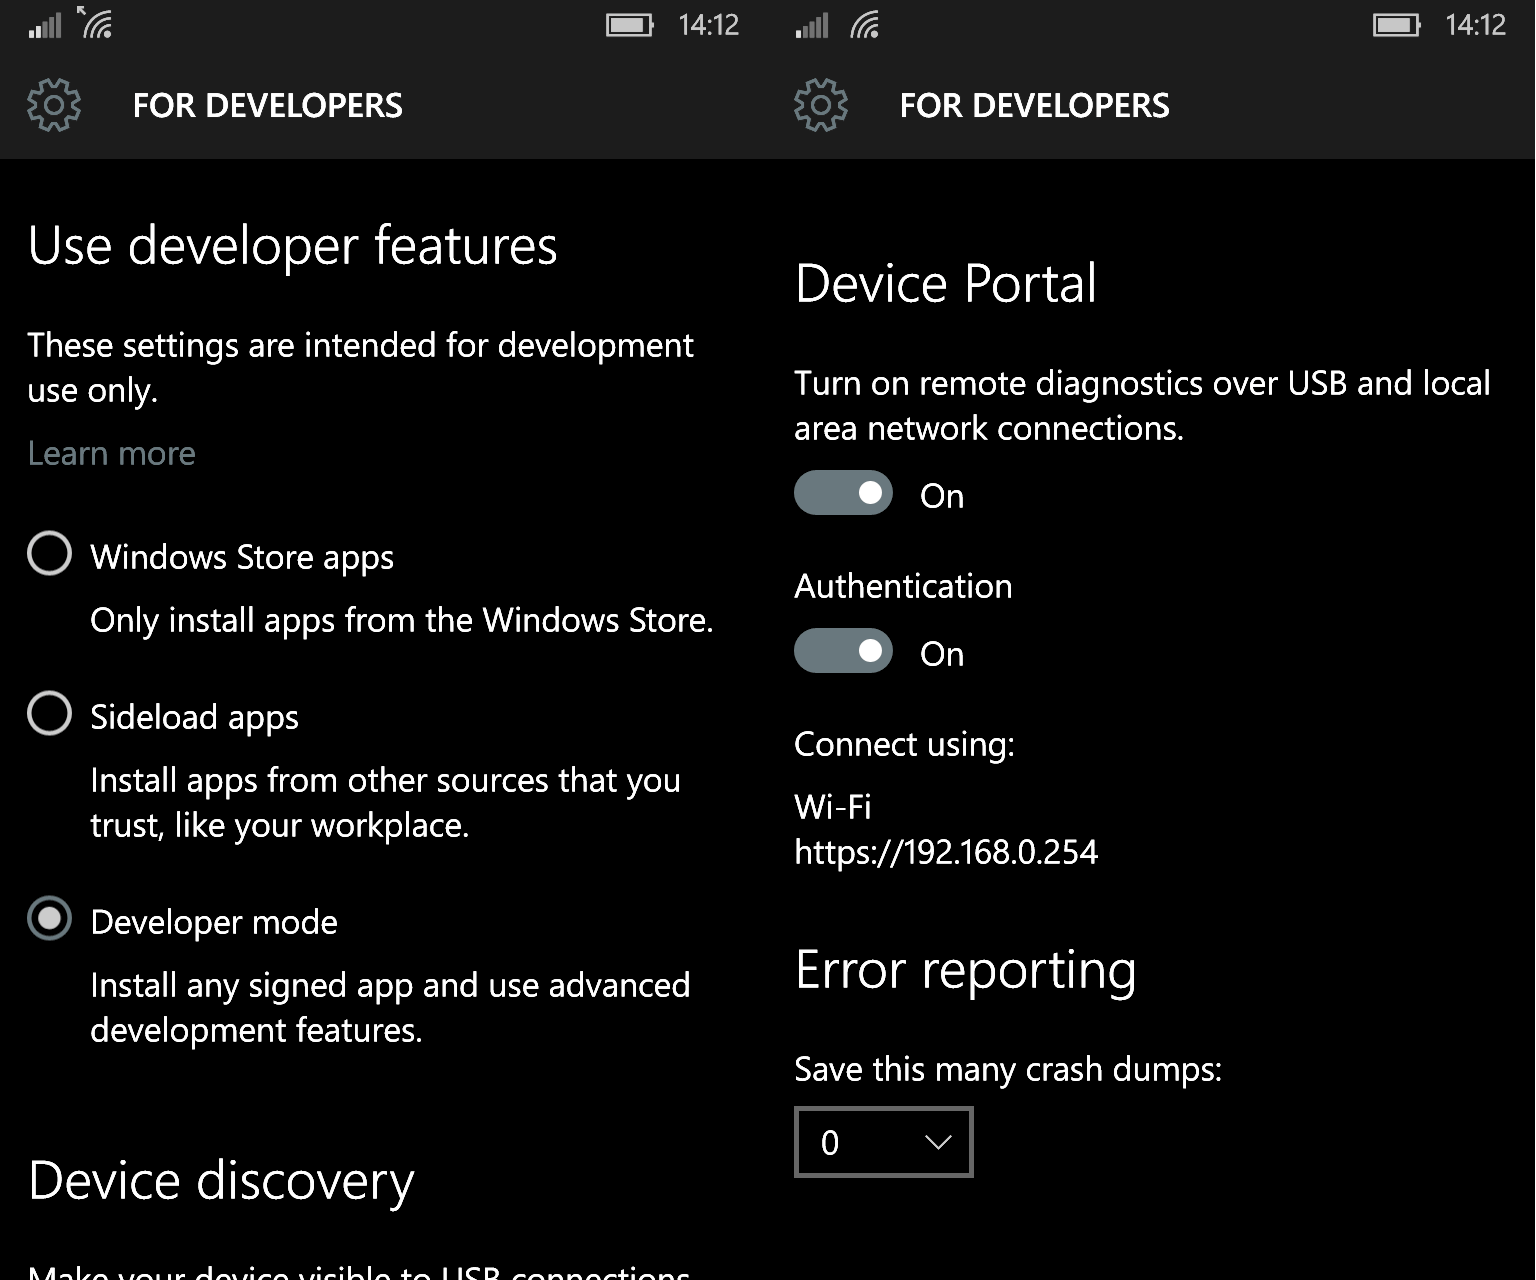 Windows 10 mobile app development tutorial freeware download manager for windows 7